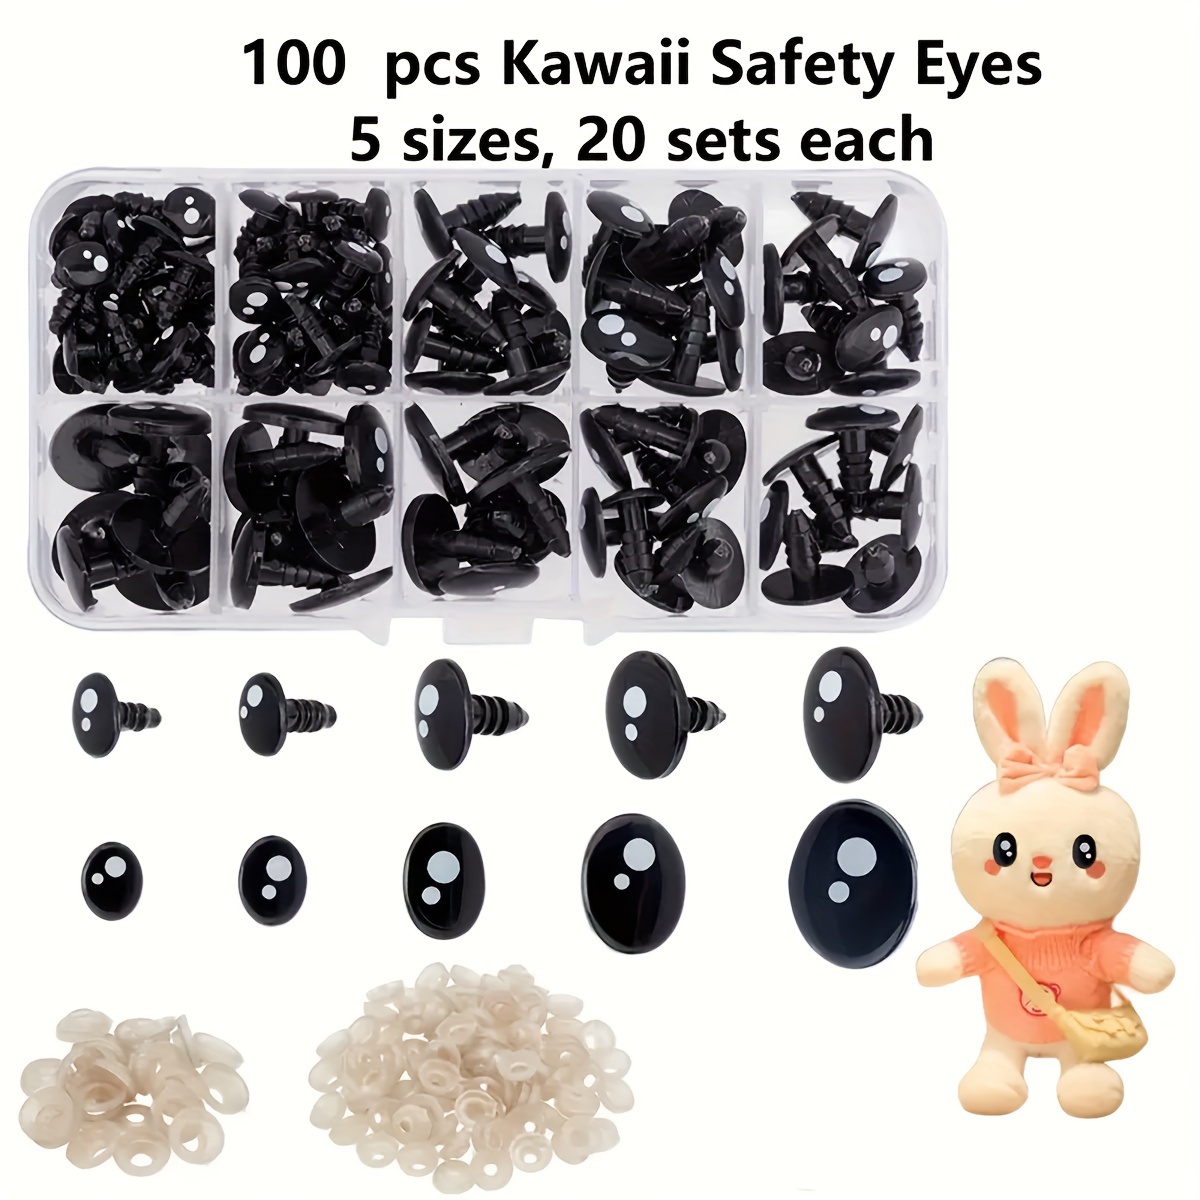 

100pcs Cute Safety Eyes, 5 Sizes, Craft Eyes, 20 Sets Each, Black Stuffed Animal Eyes, Kawaii Eyes With Washers, Oval Resin Eyes For Puppet Crochet Plush Animal Making And Doll Diy